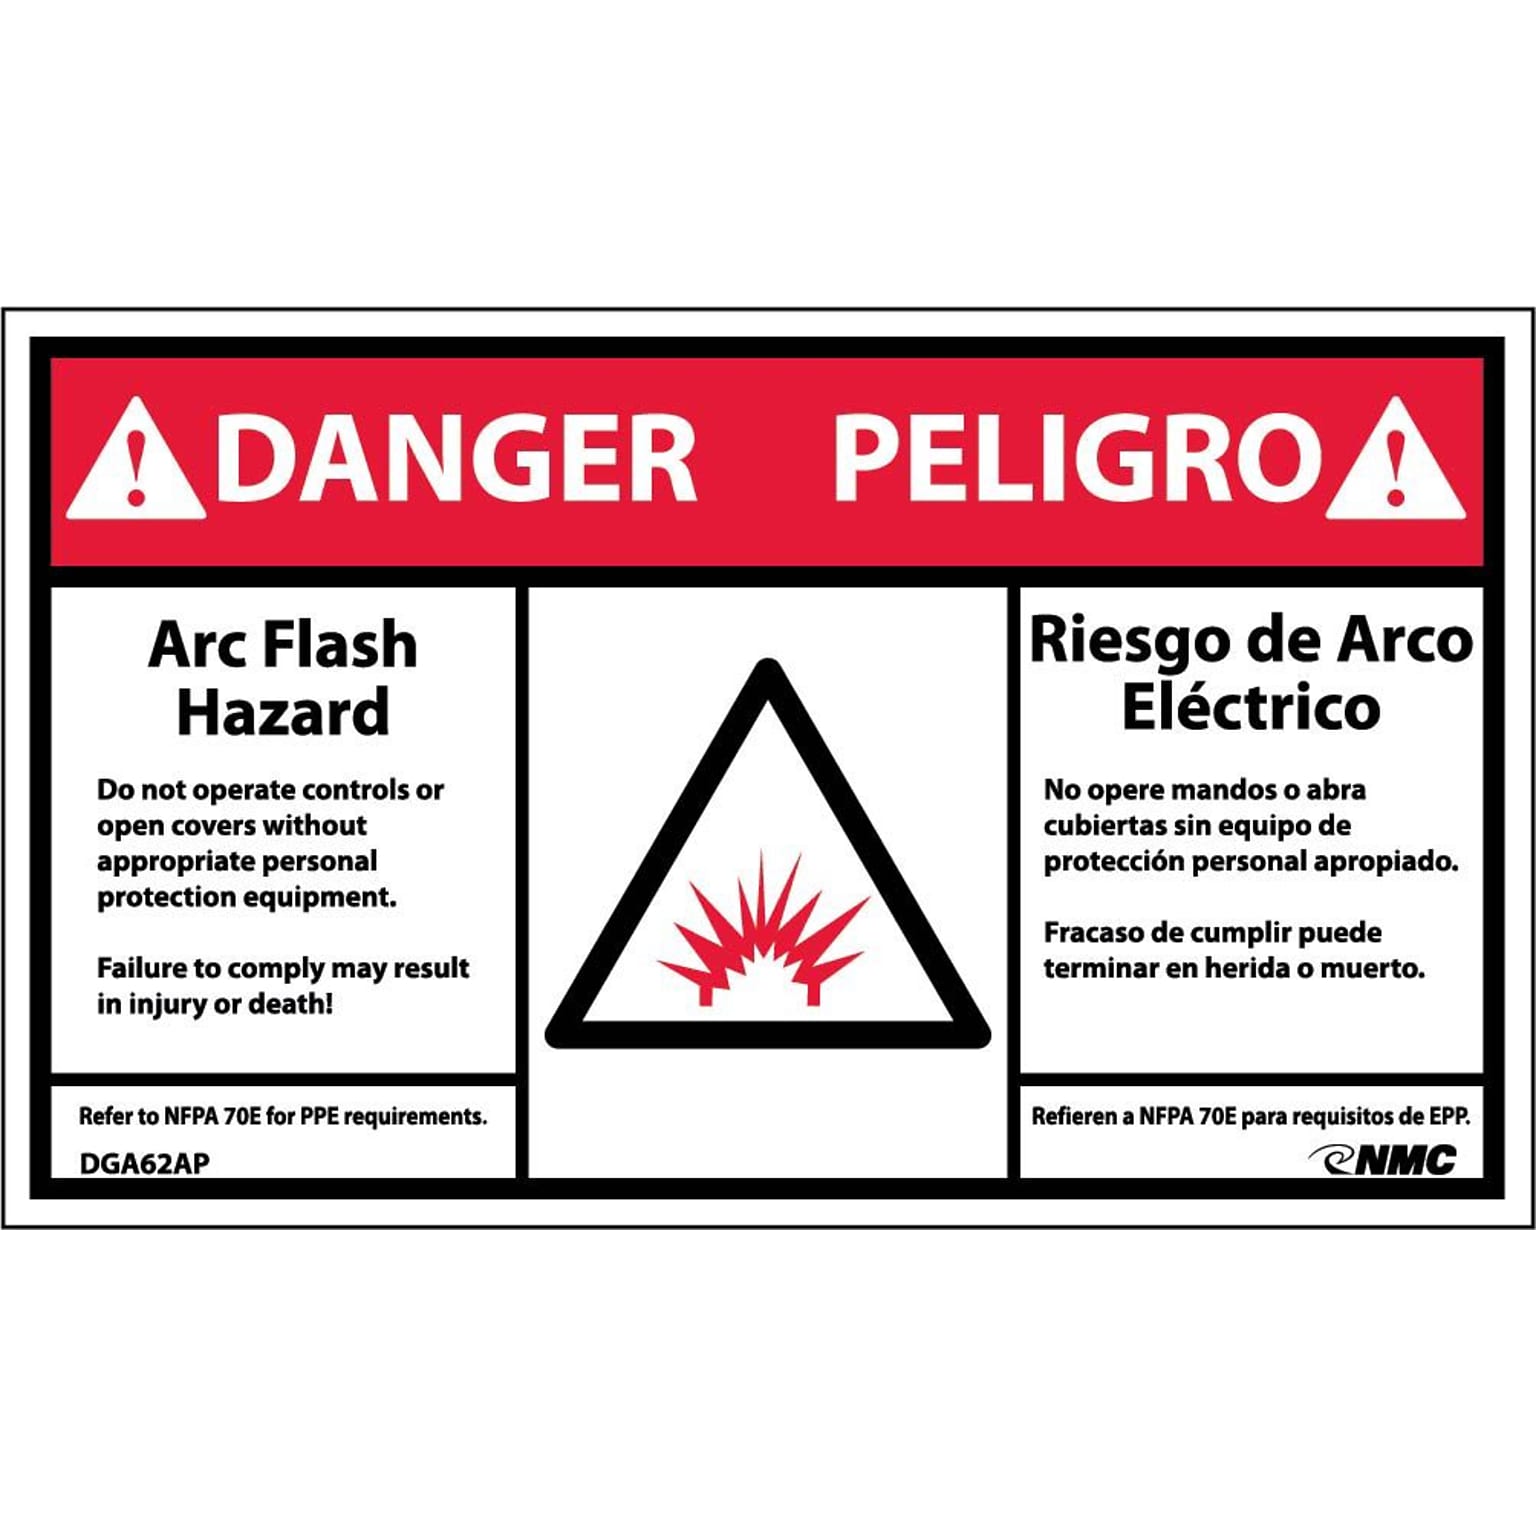 Danger Labels; Arc Flash And Shock Hazard, Bilingual, (Graphic), 3 x 5, Adhesive Vinyl, 5/Pack